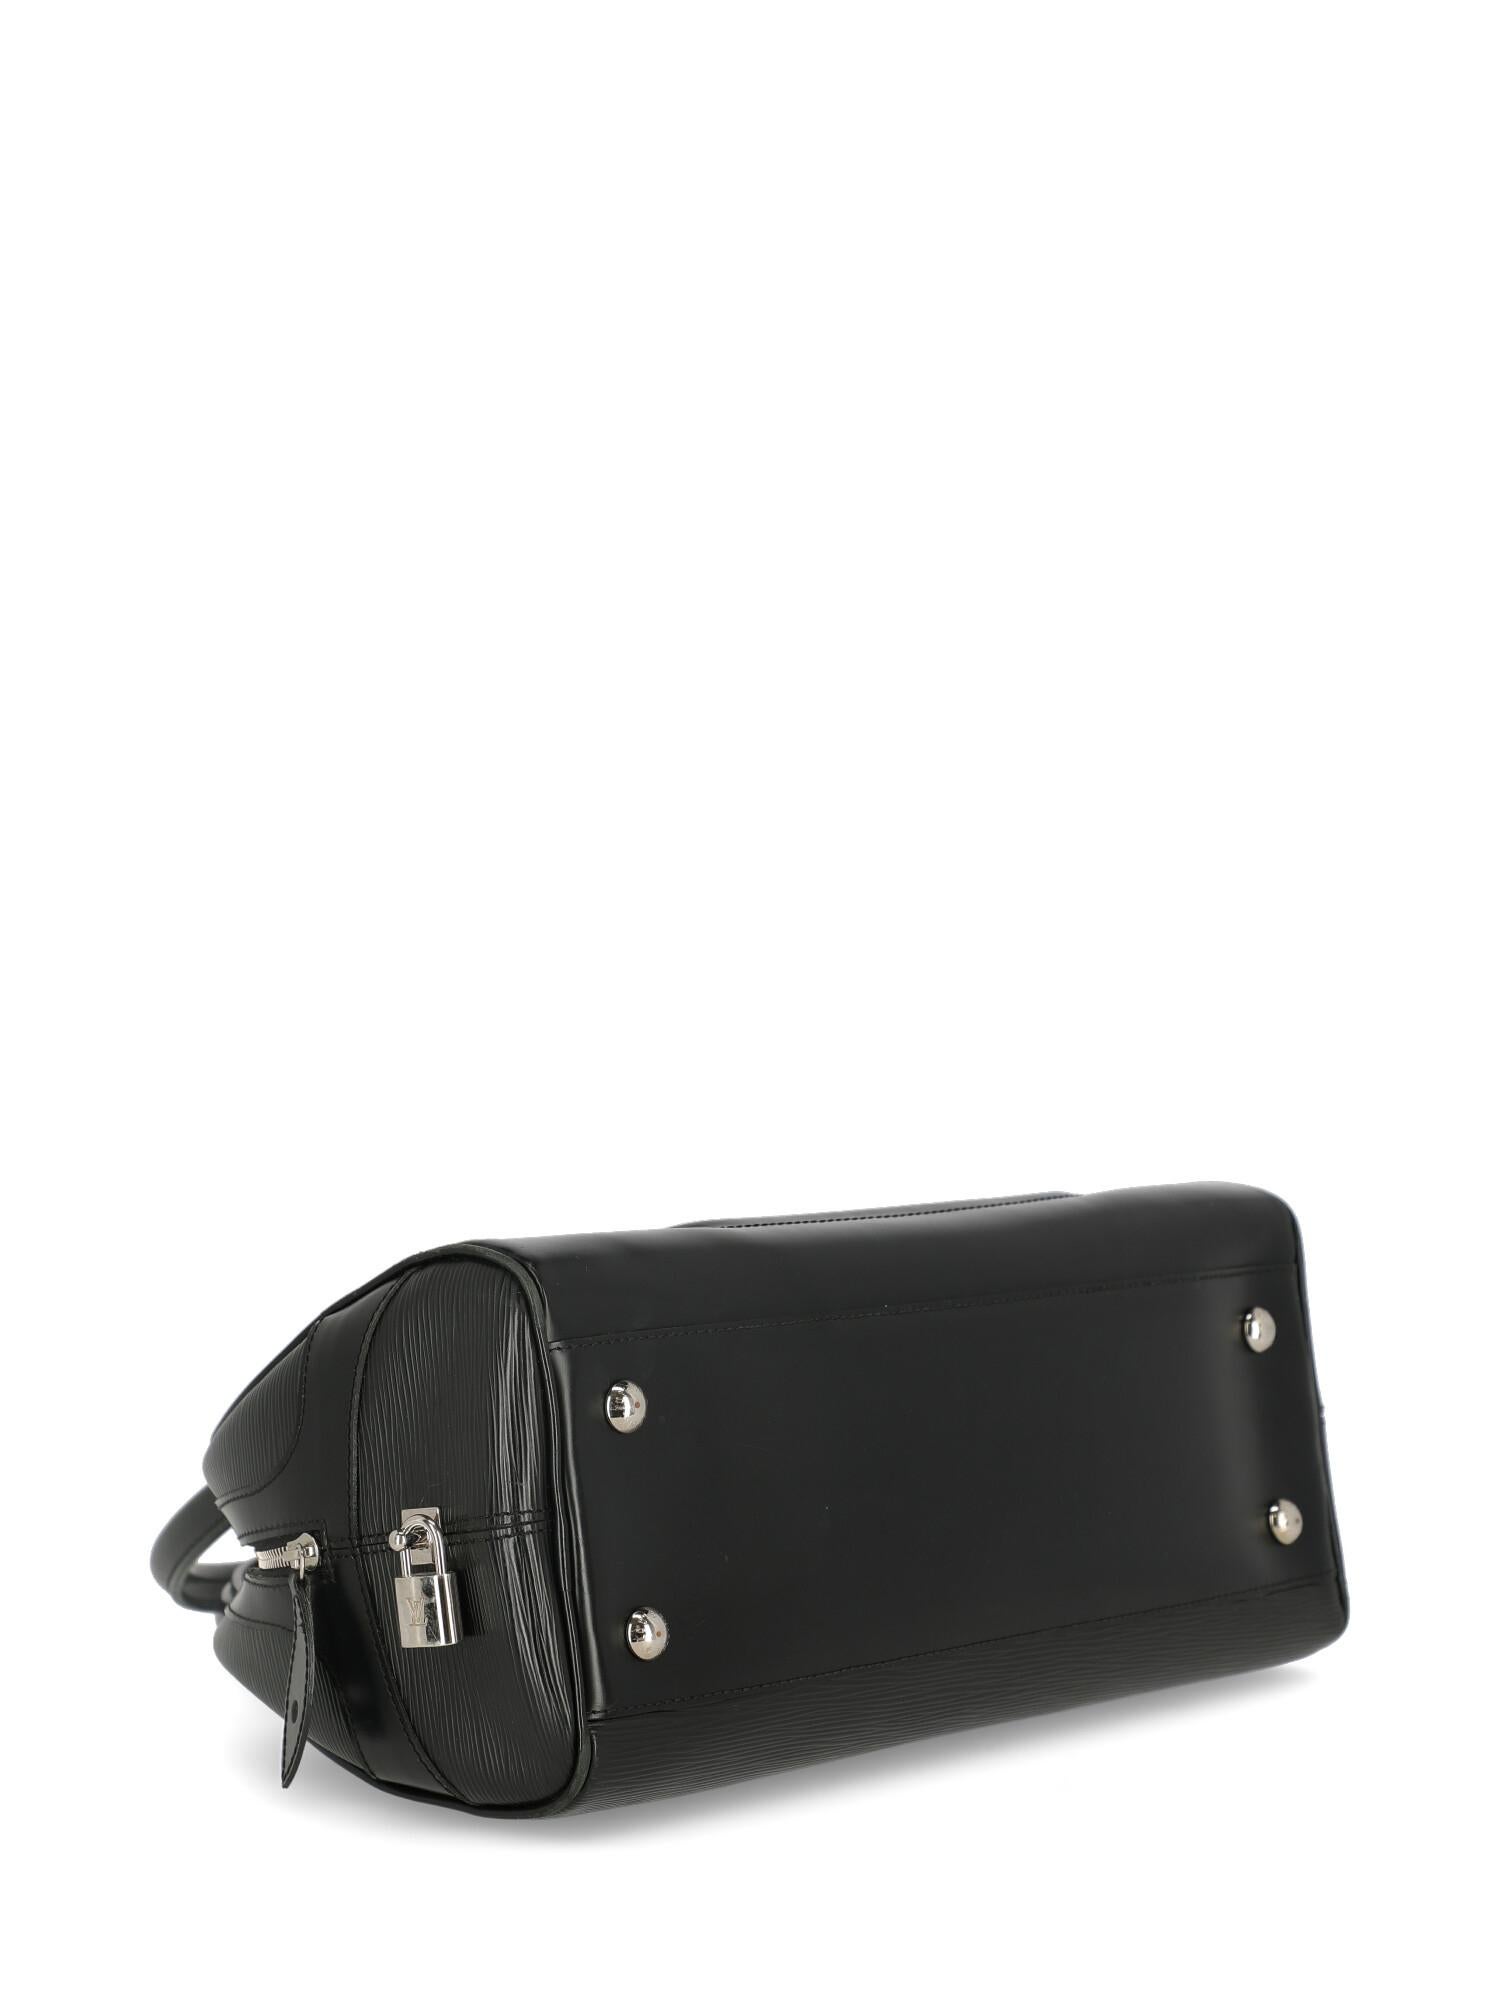 Louis Vuitton Woman Handbag Montaigne Black Leather 1